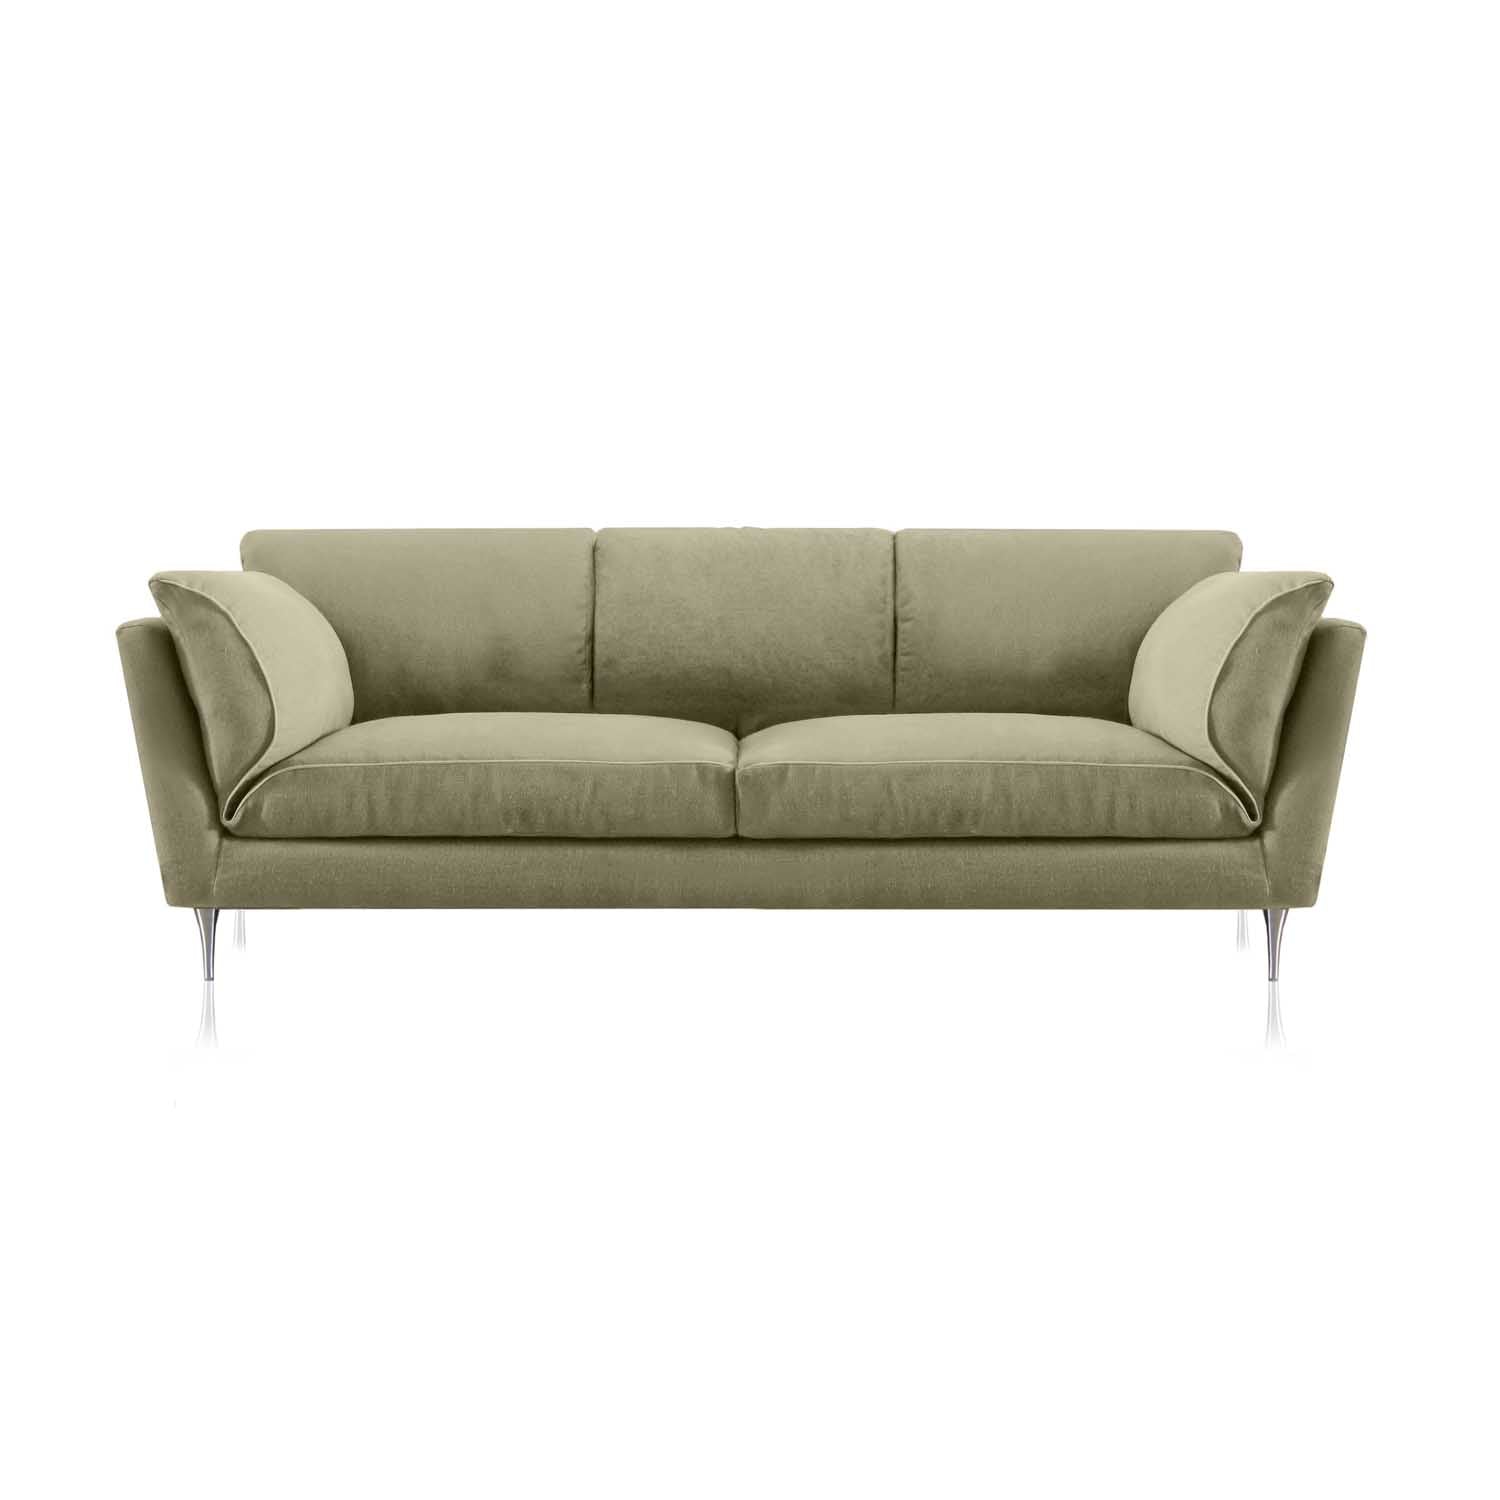 Pure Comfort in Classy Design: Sofa Excellence